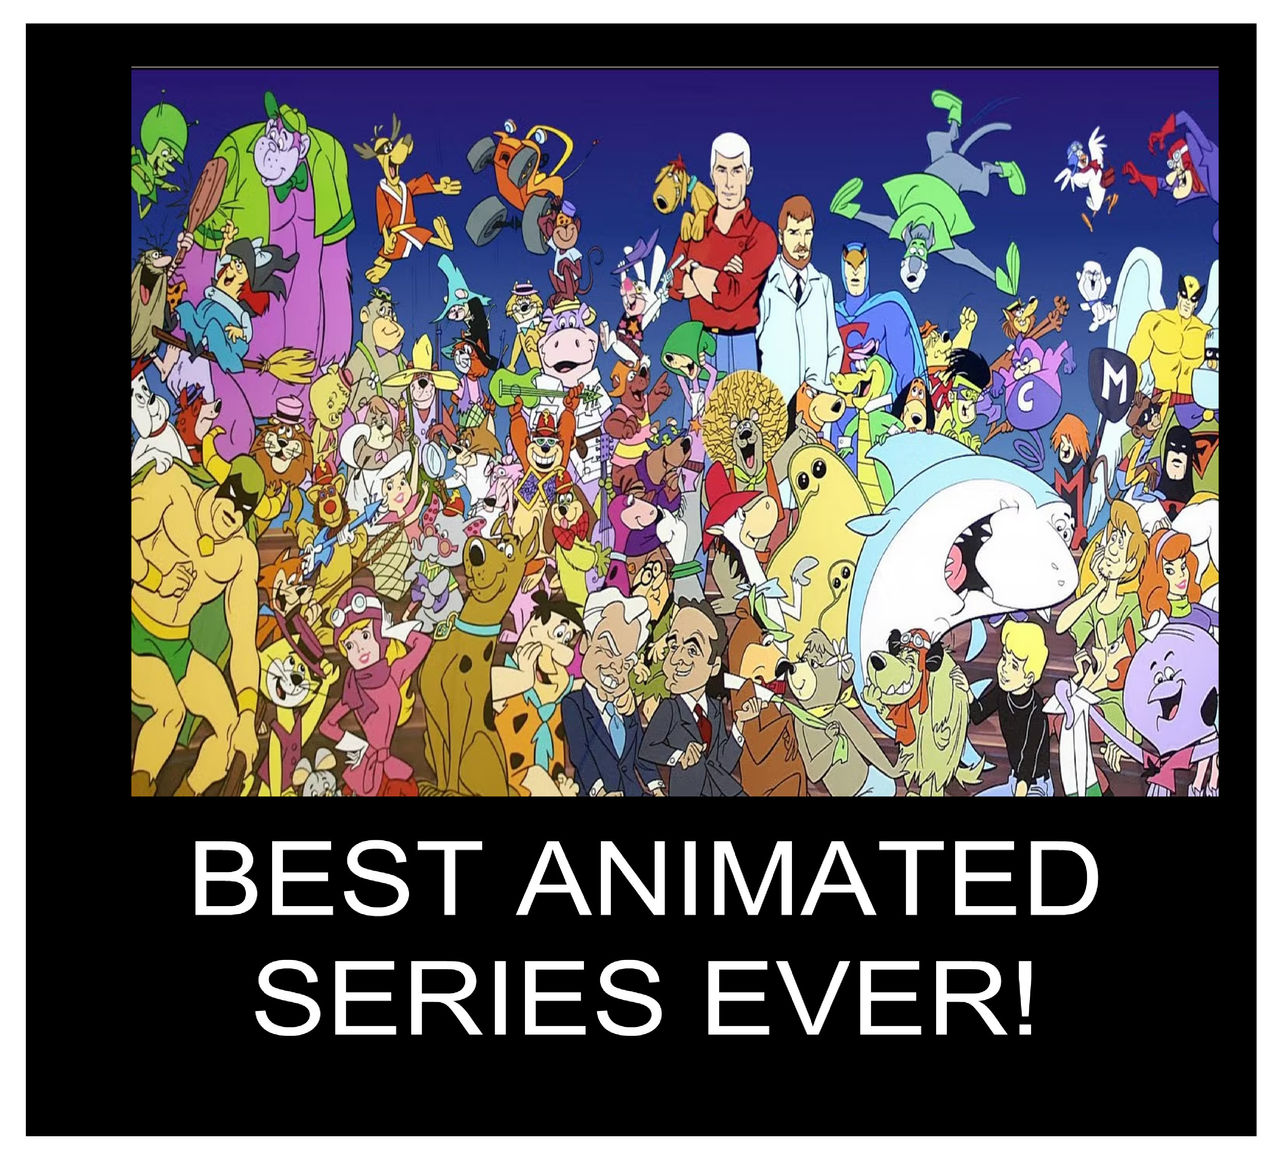 Best Animated Series Ever Hanna Barbera Cartoons by Perro2017 on DeviantArt